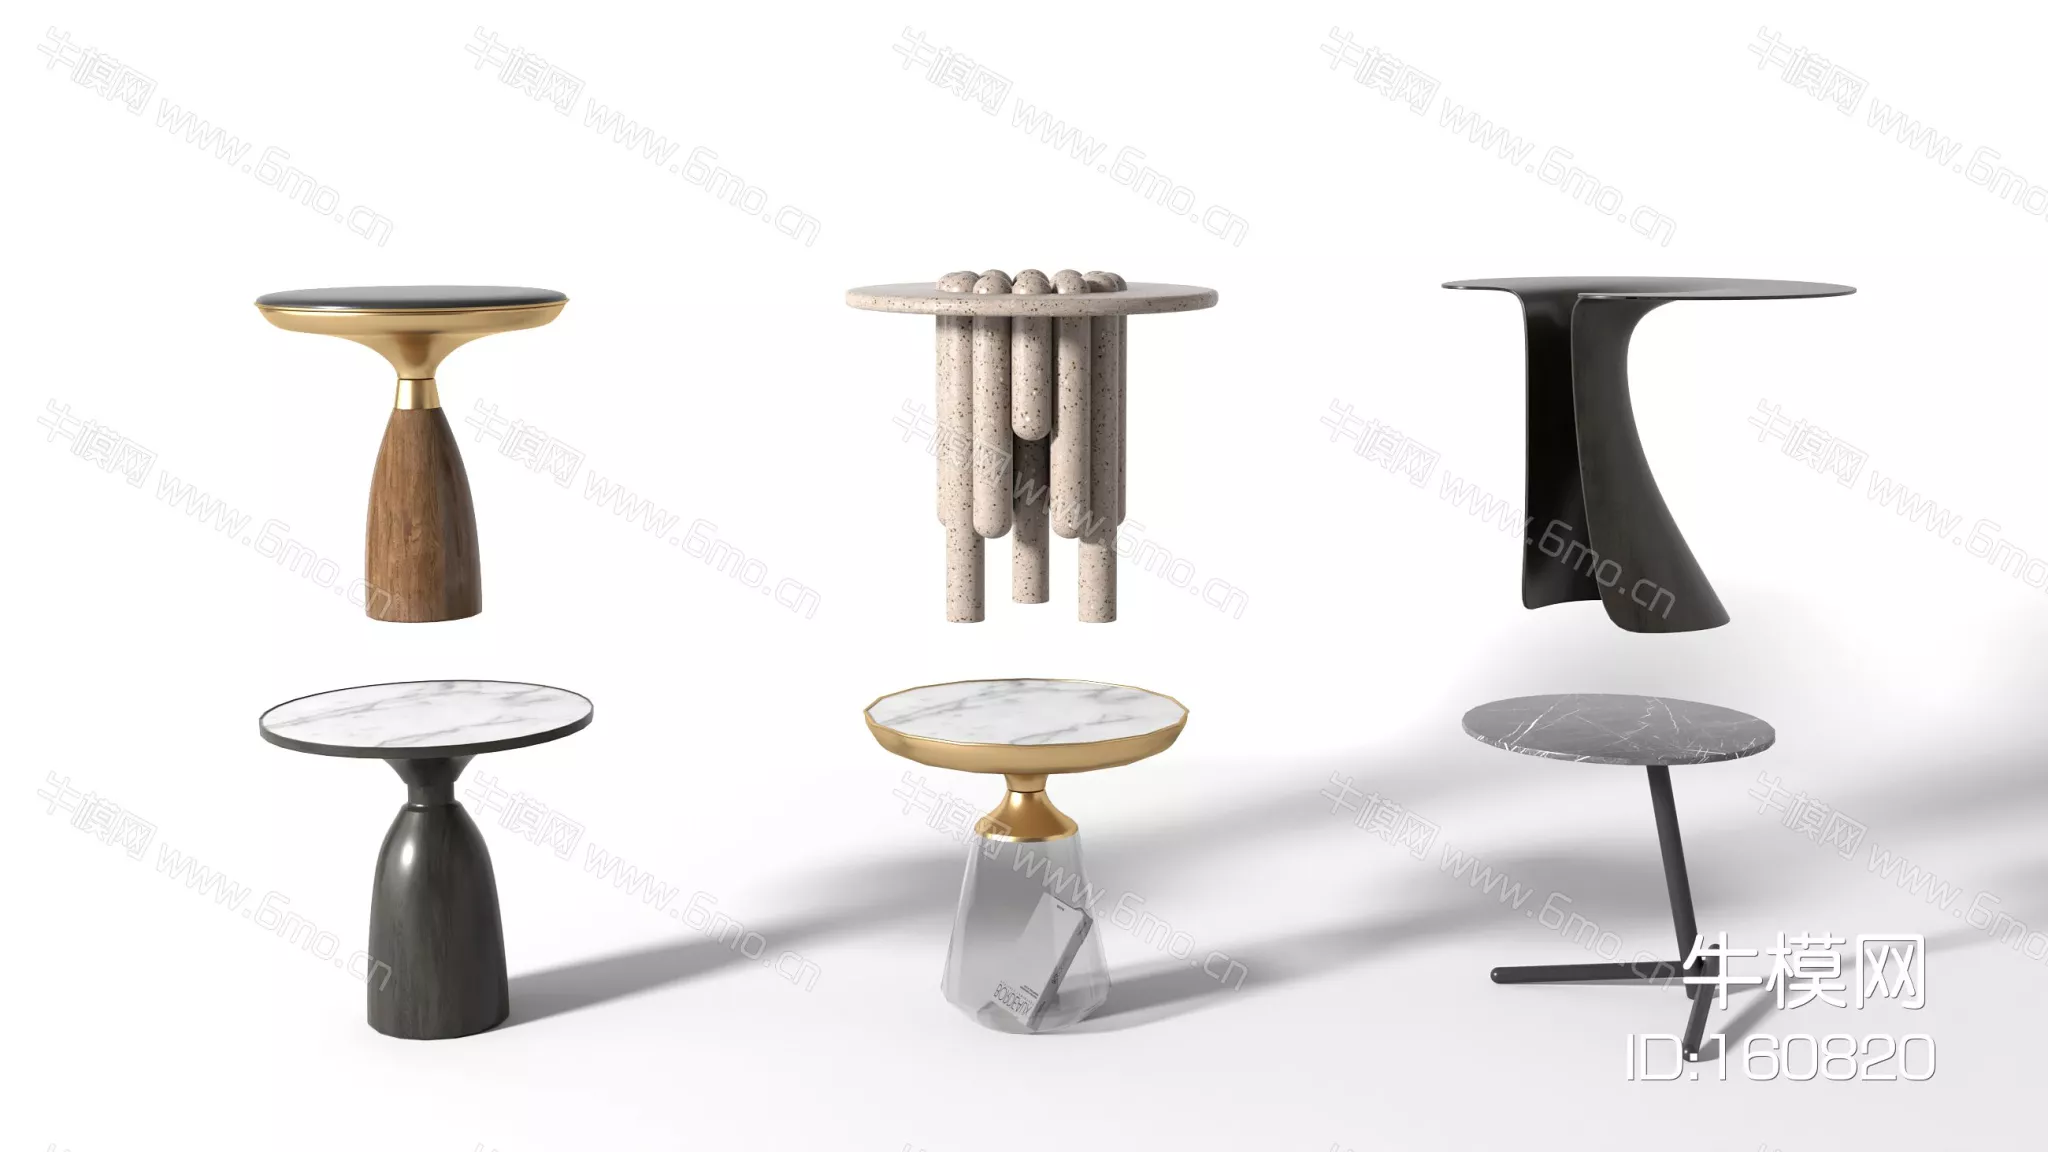 MODERN SIDE TABLE - SKETCHUP 3D MODEL - VRAY - 160820